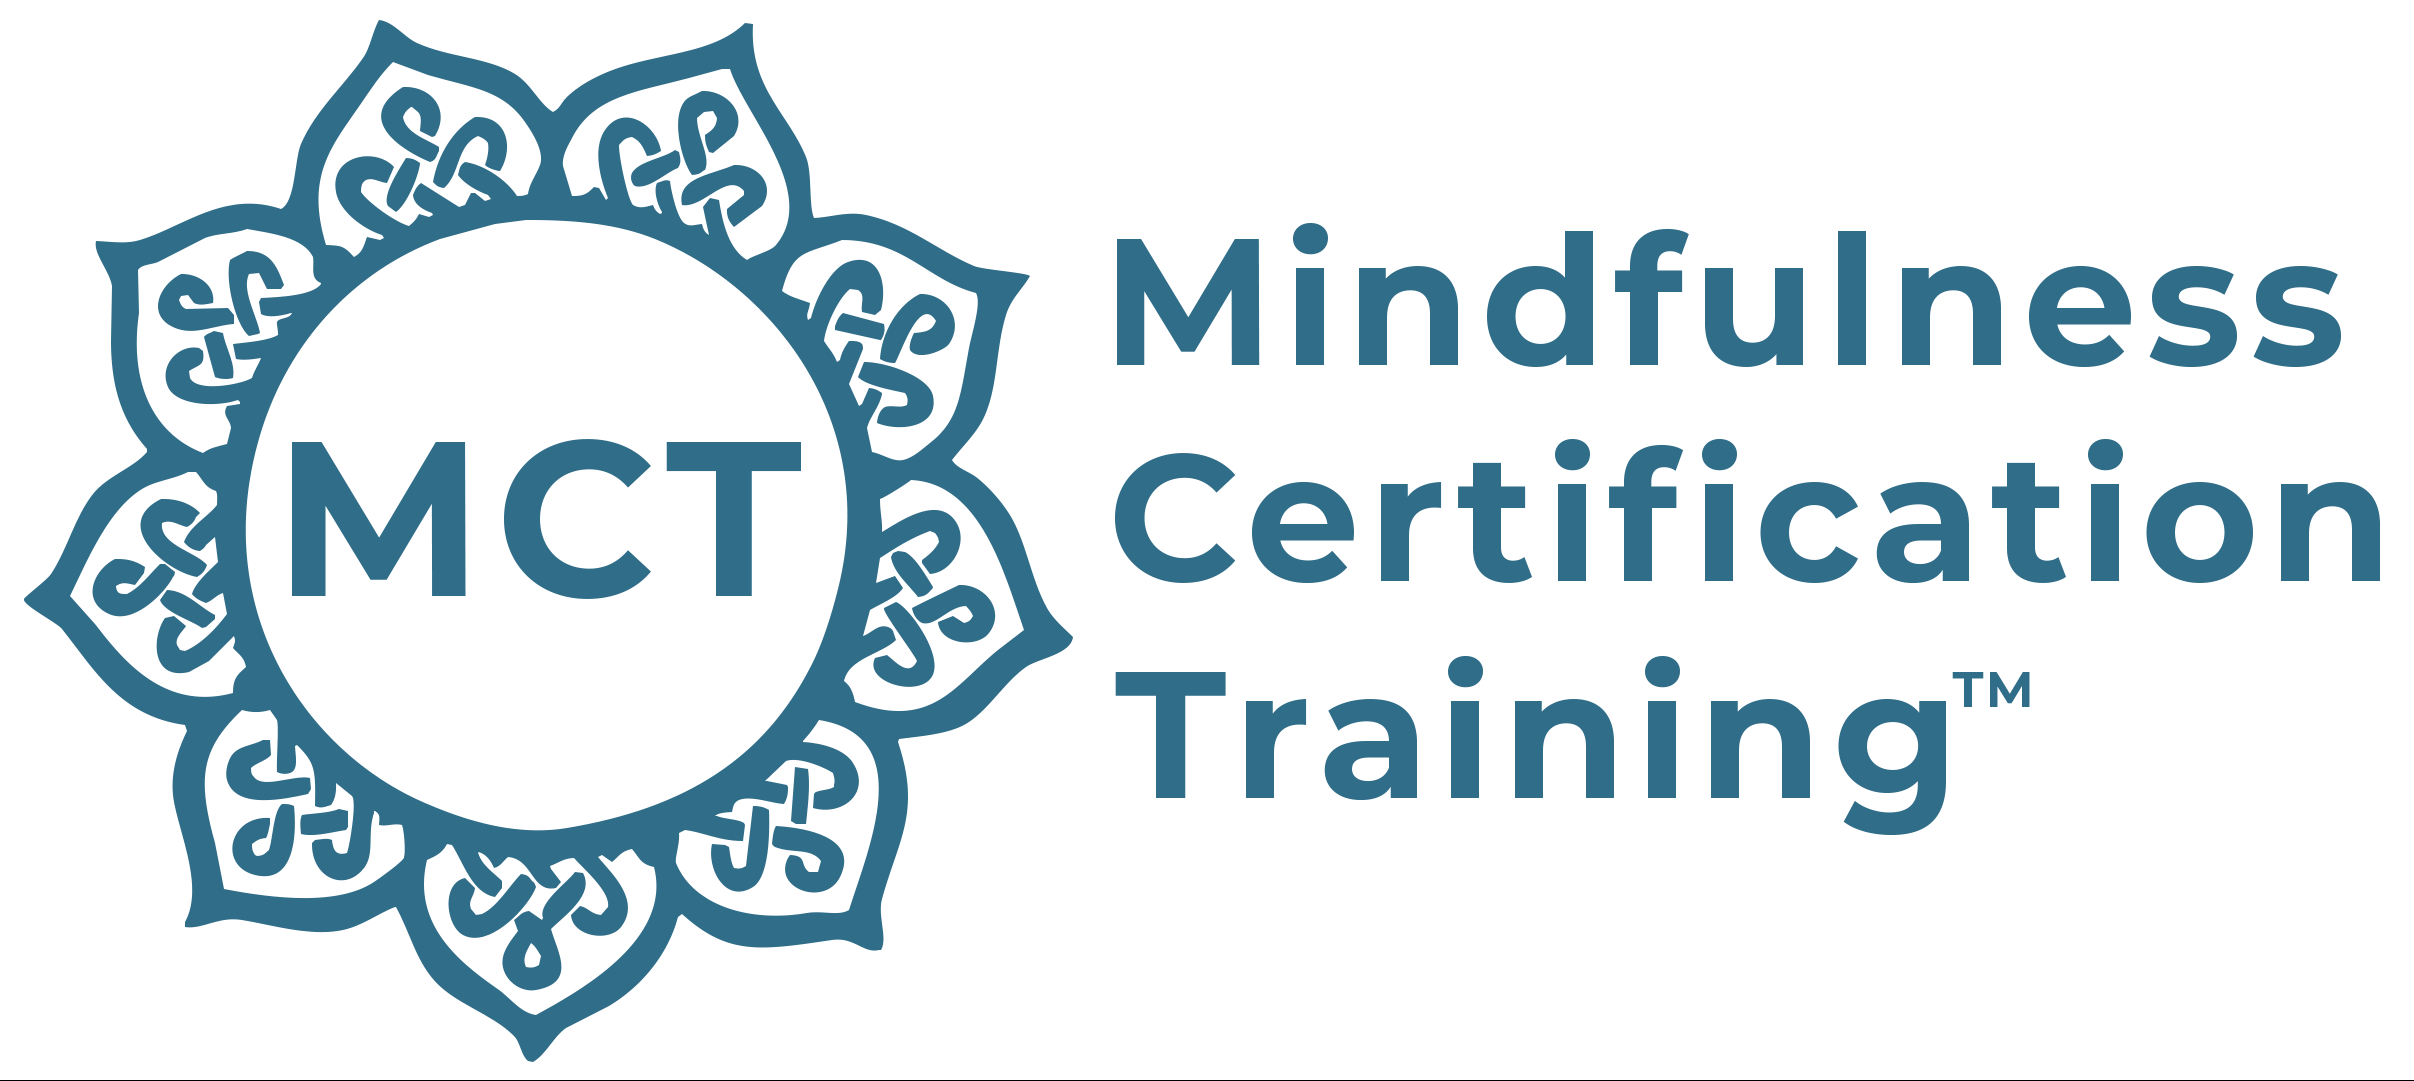 Mindfulness Certification Training™
